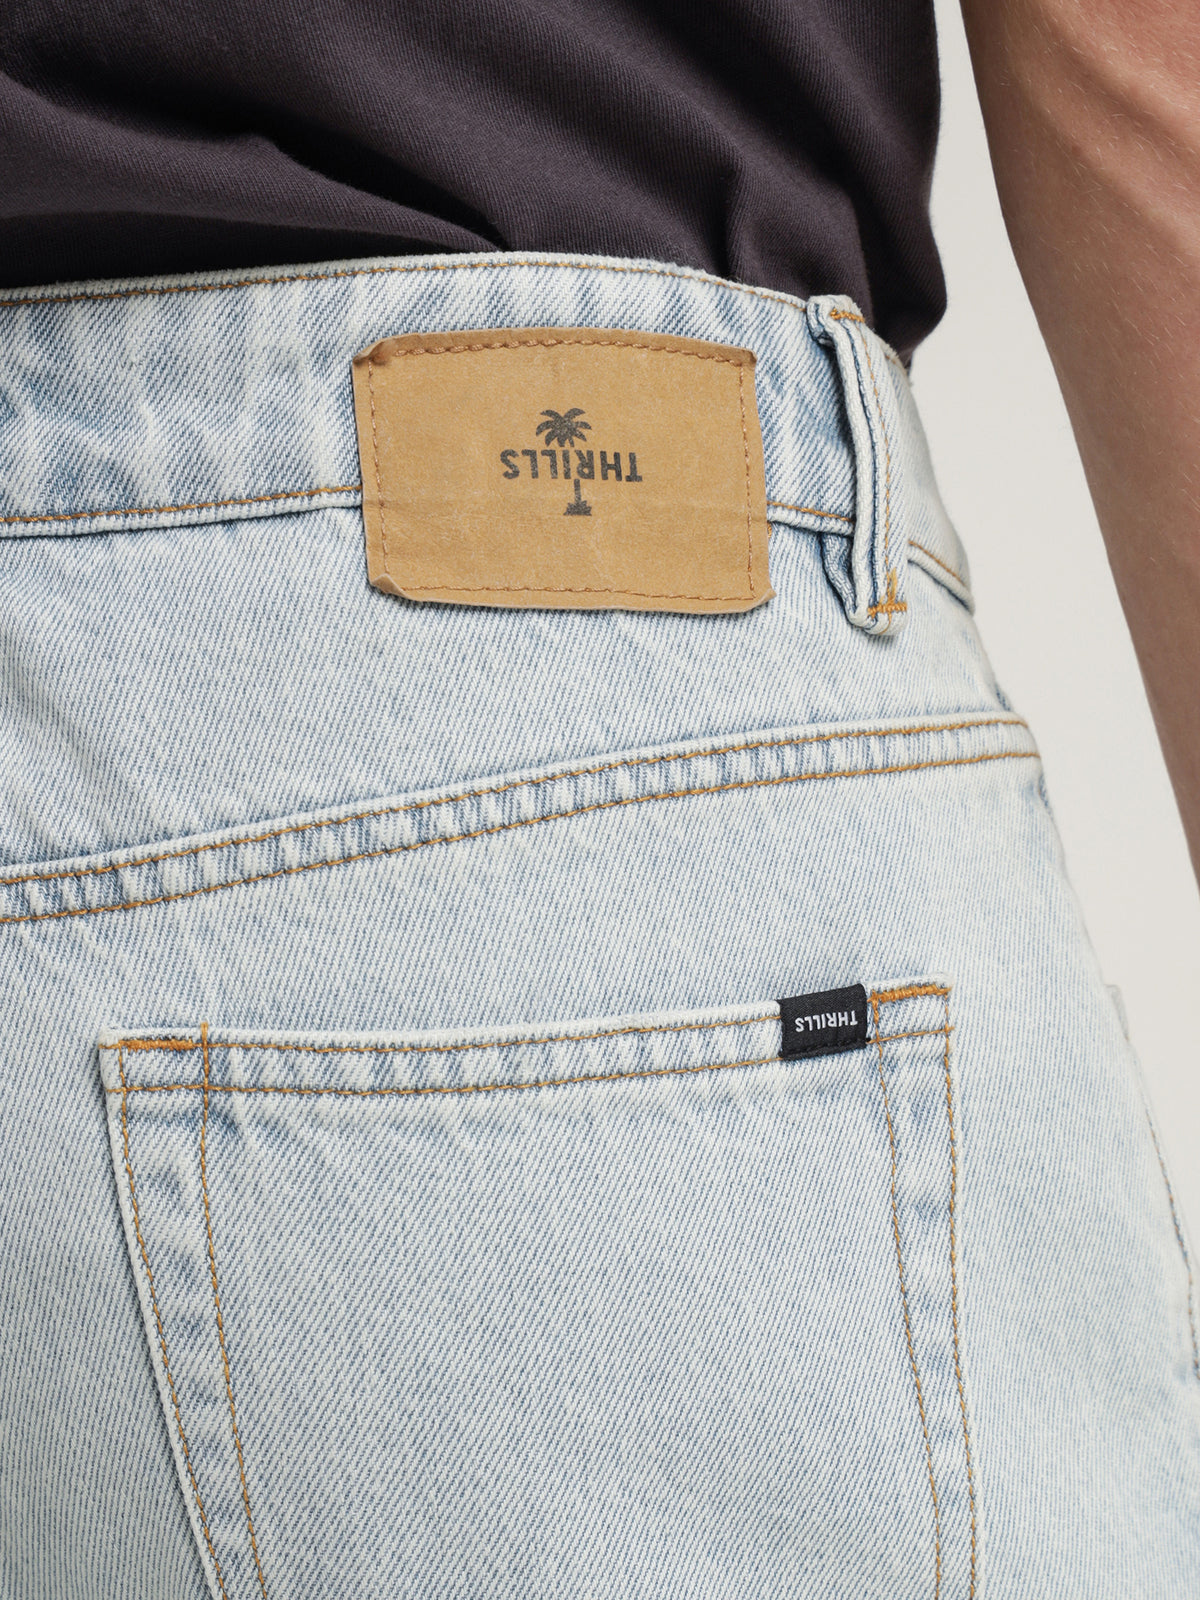 Chopped Denim Jeans in Faded Generation